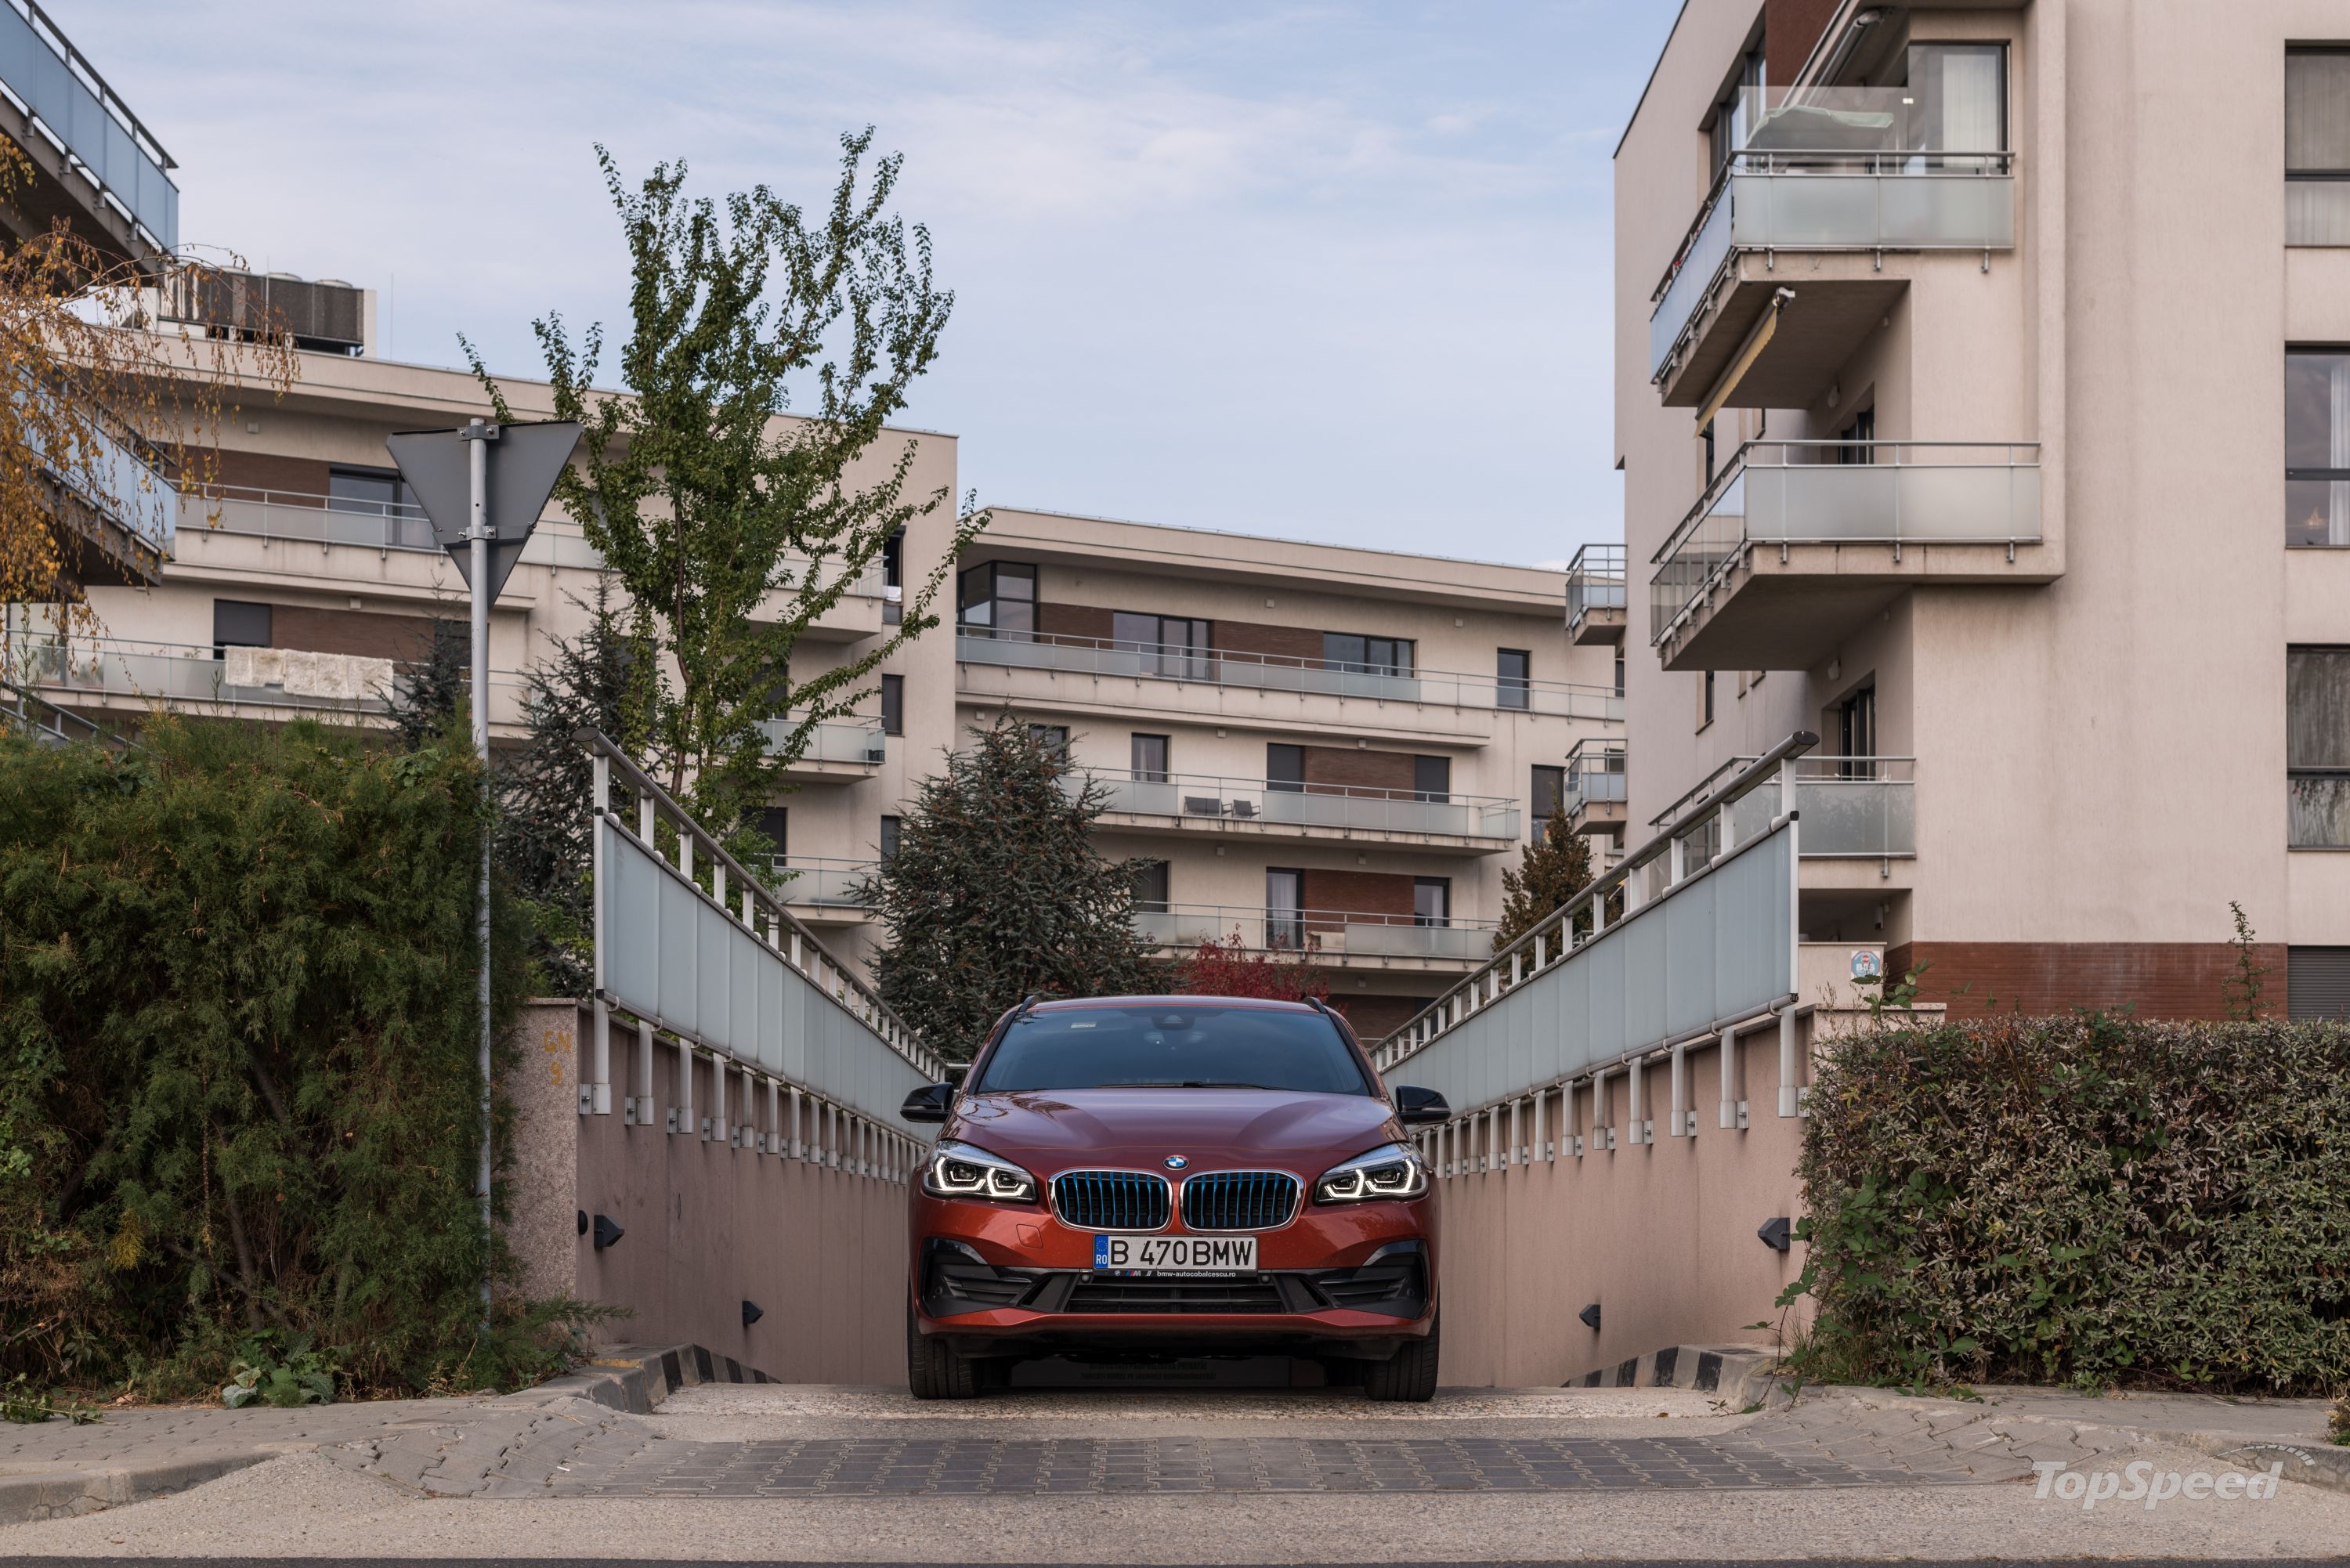 2018 BMW 225xe iPerformance plug-in hybrid - Driven